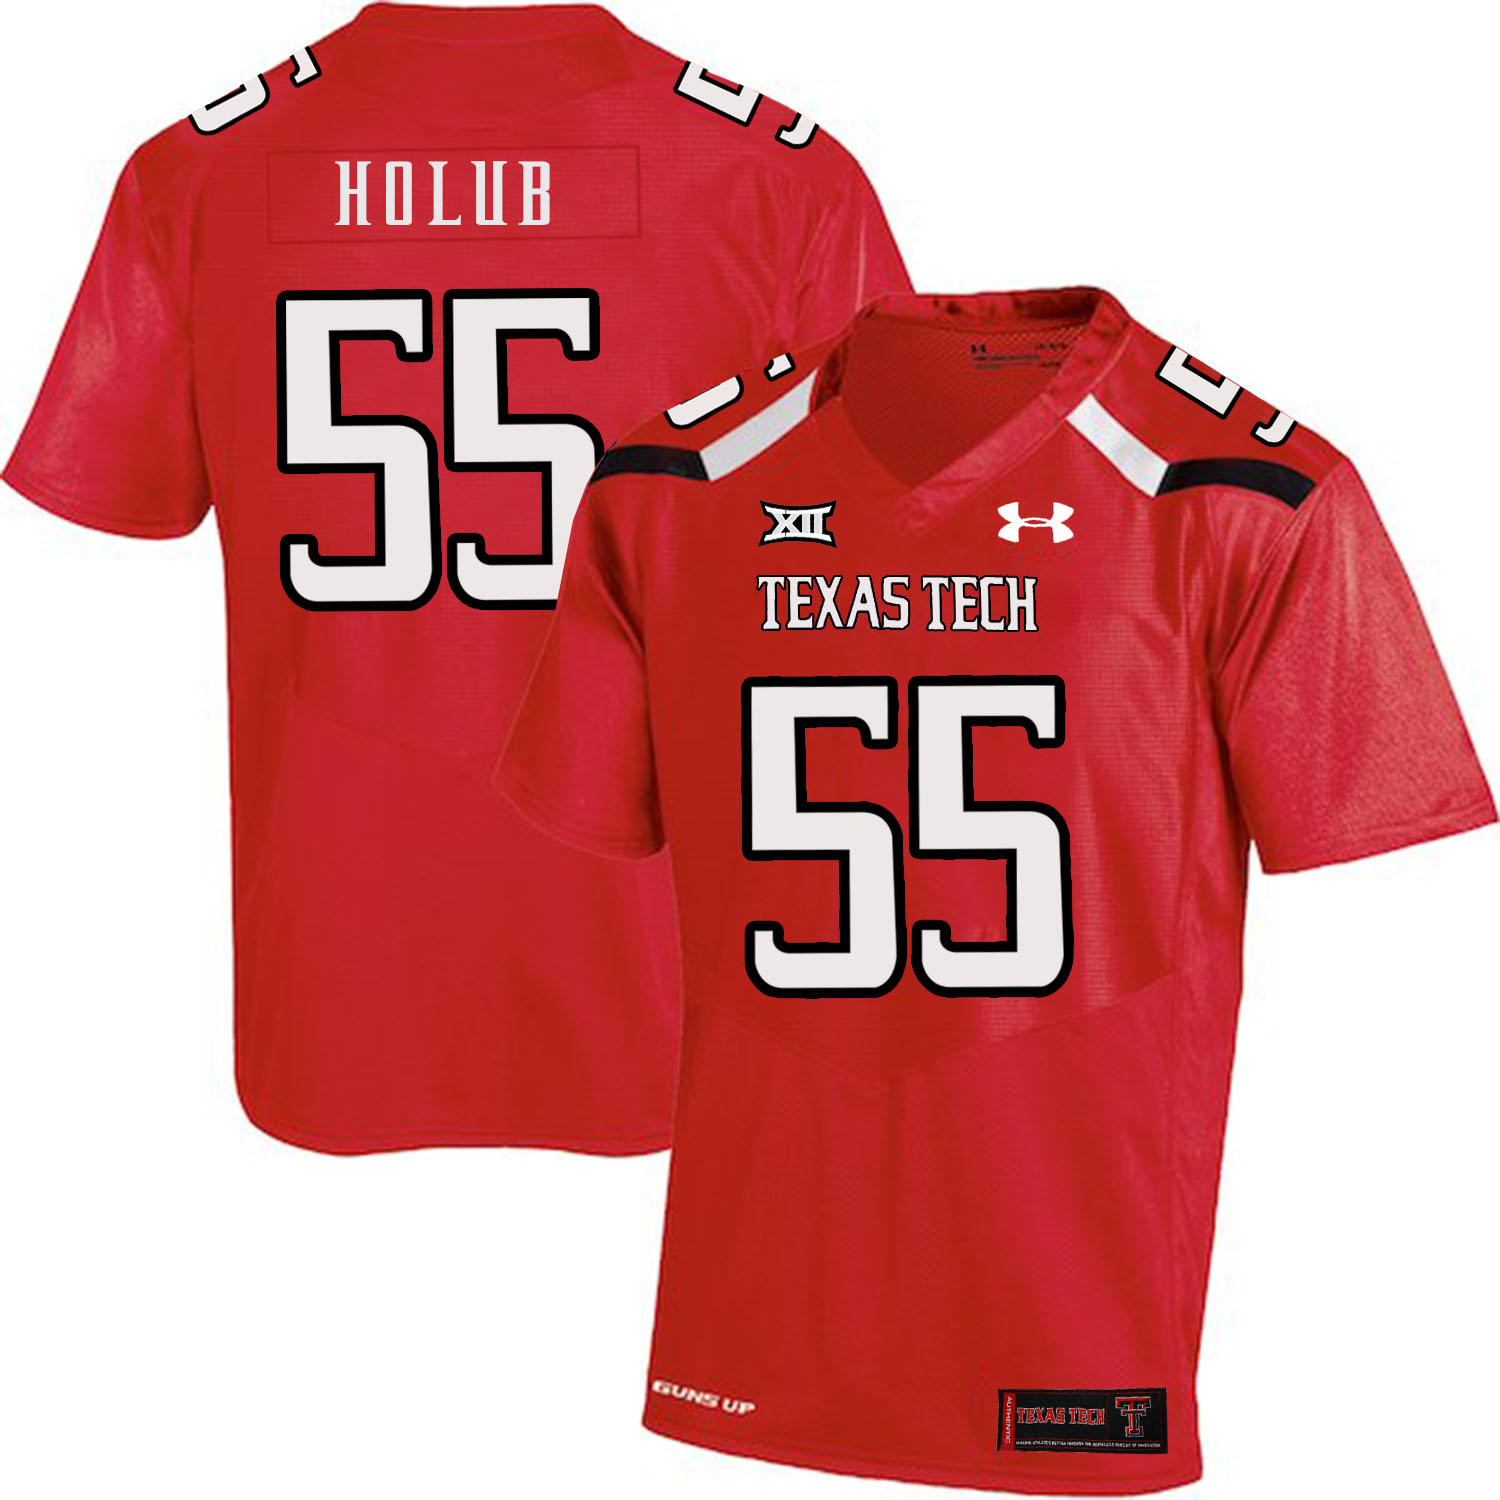 Texas Tech Red Raiders 55 E.J. Holub Red College Football Jersey